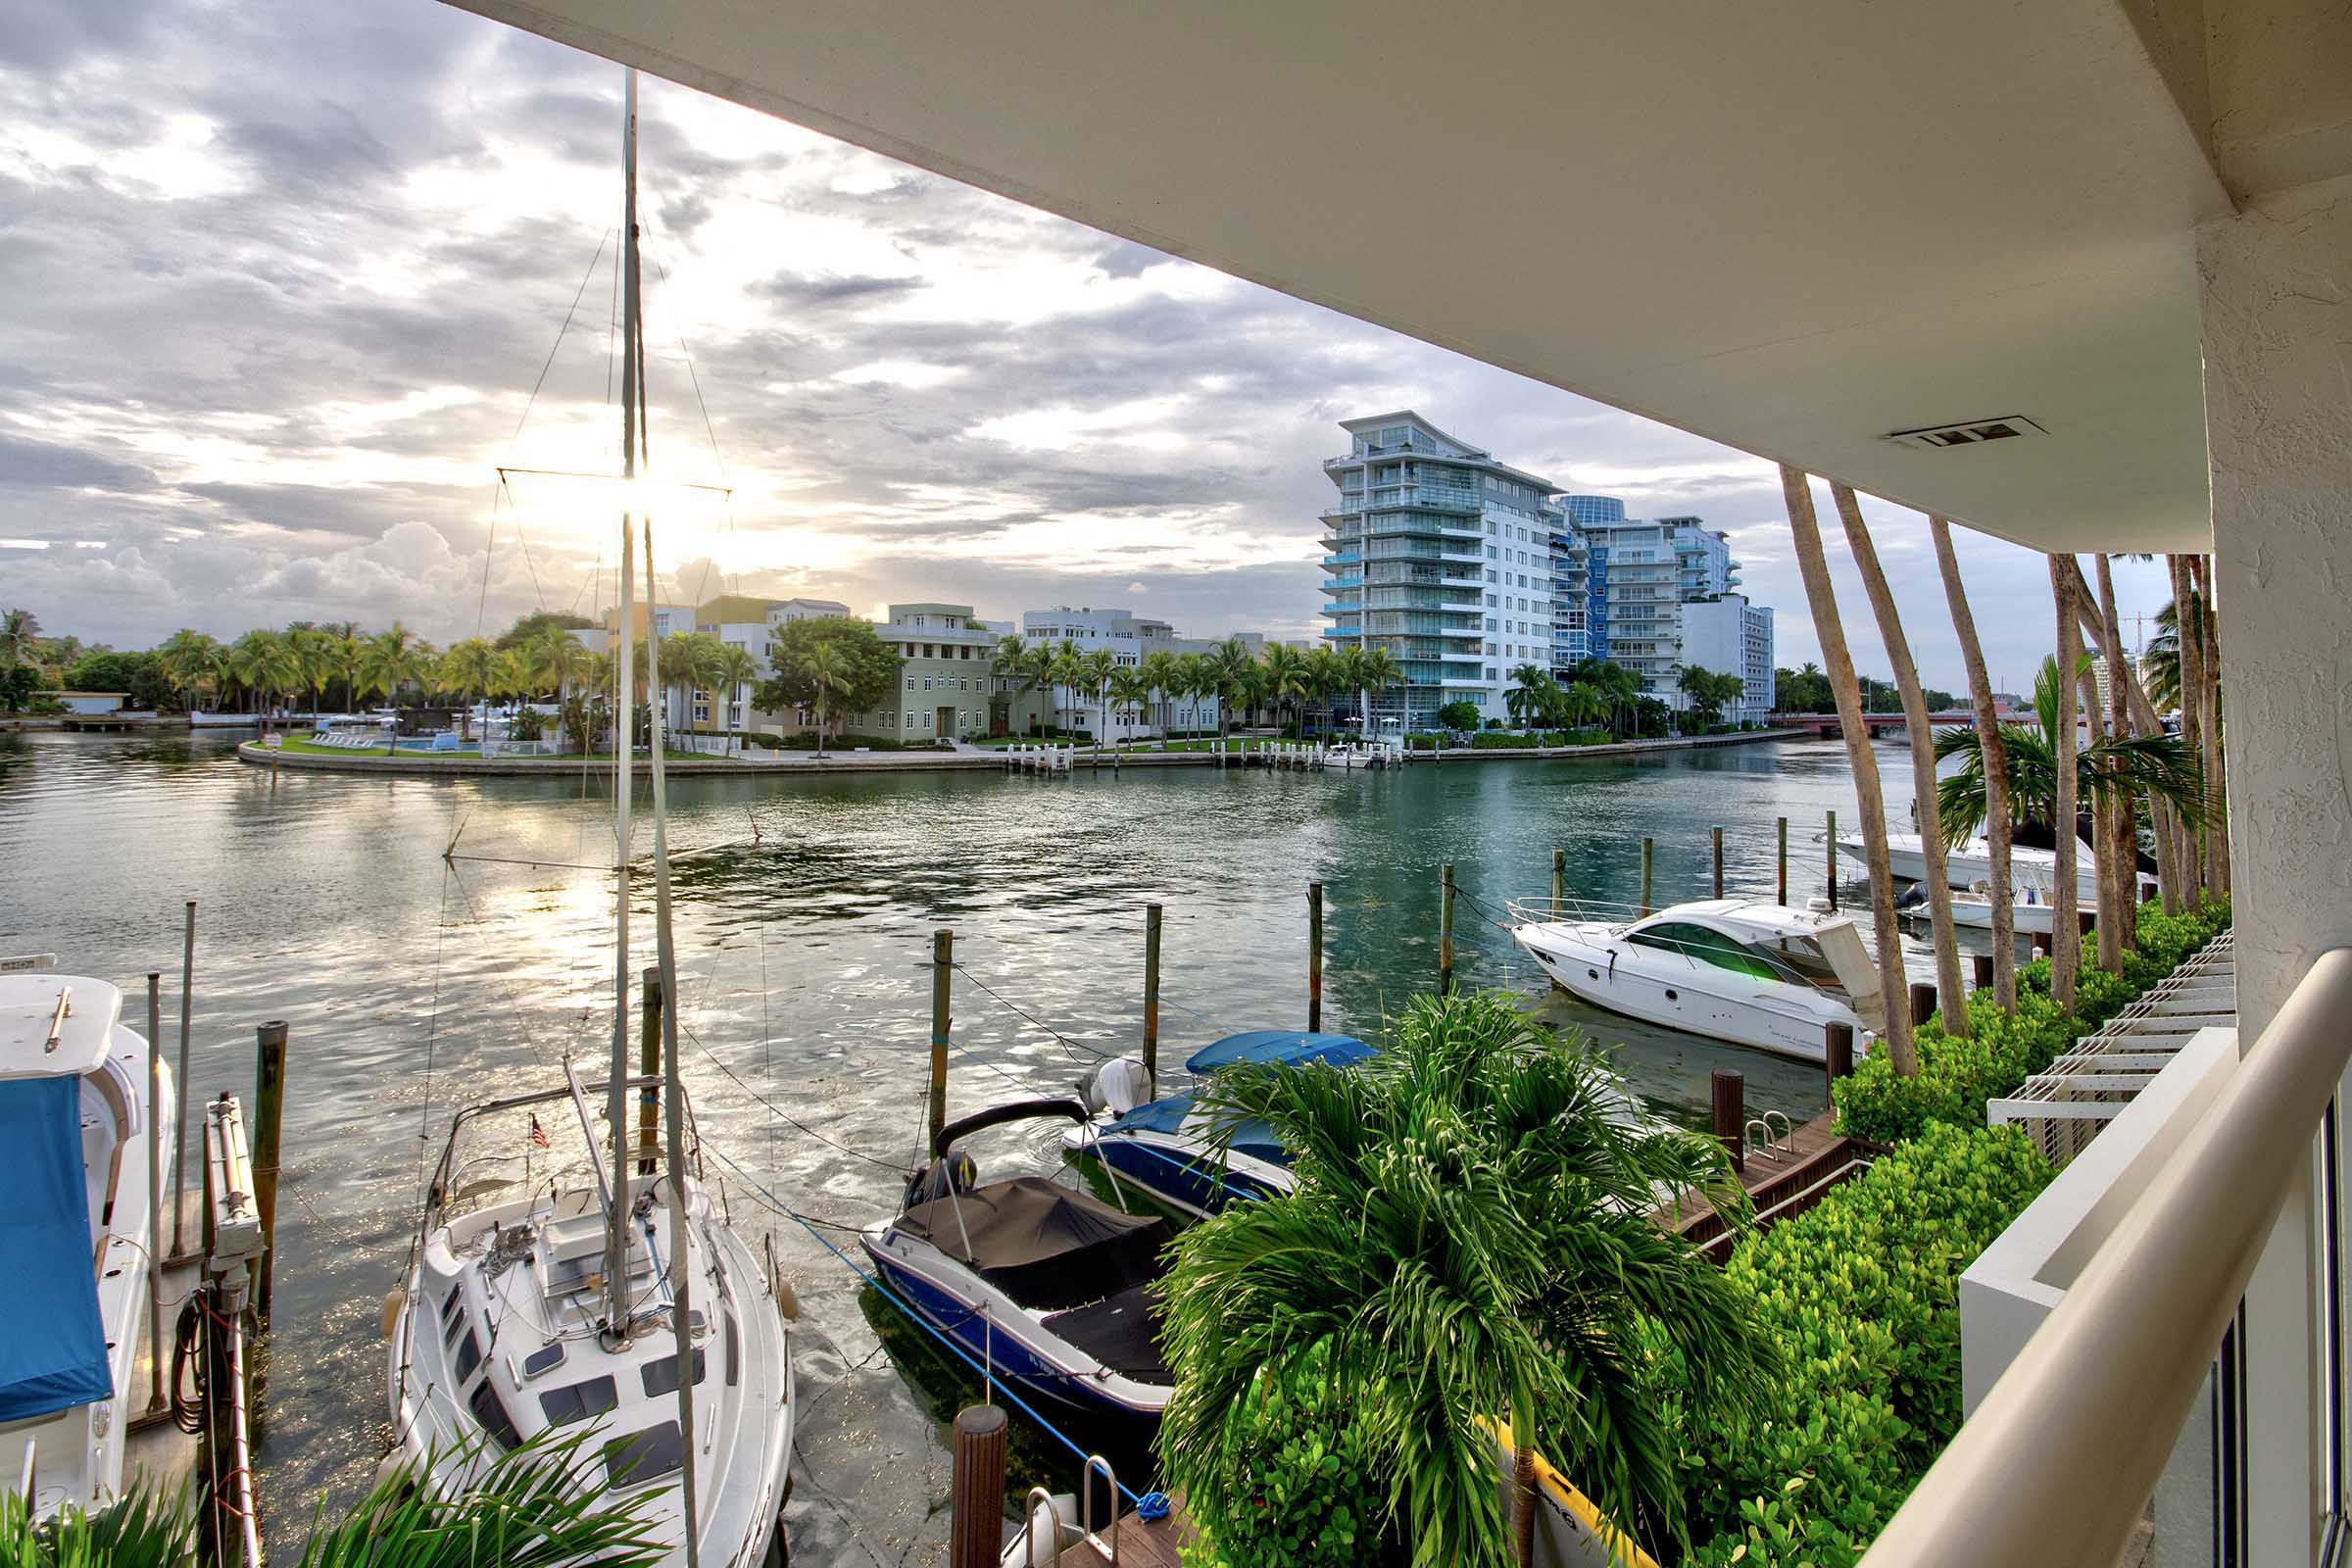 The Grandview Miami Beach Marina